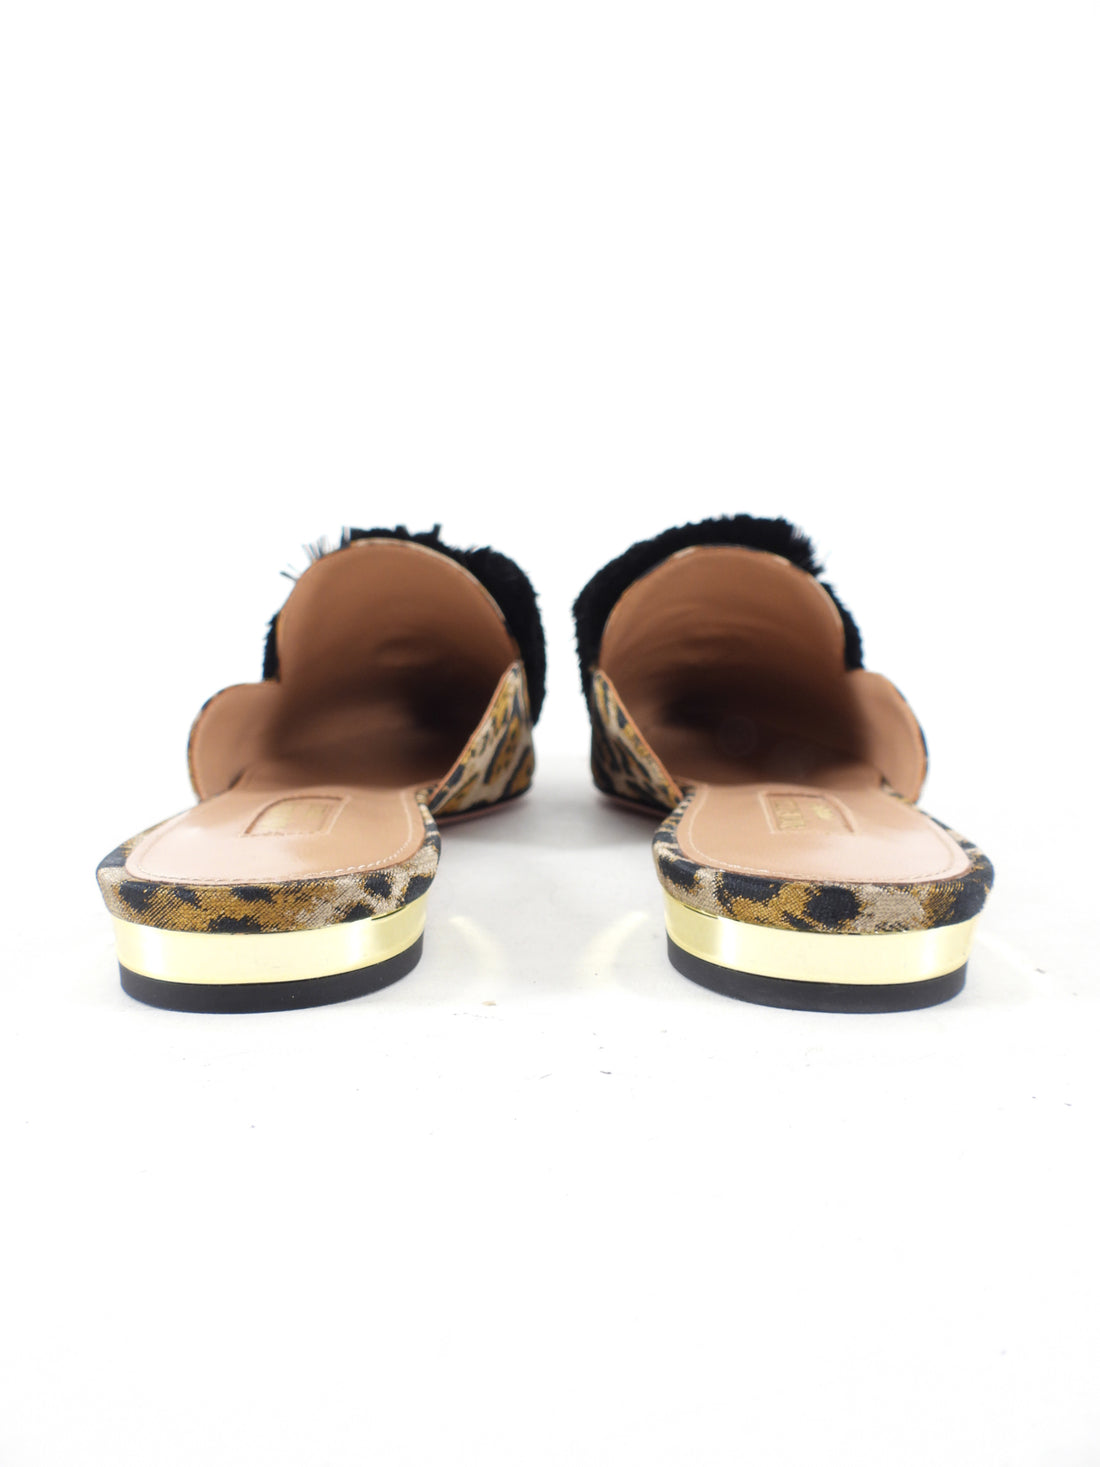 Aquazurra Leopard Fabric Poweder Puff Flat Slide Shoes - 37 / 6.5